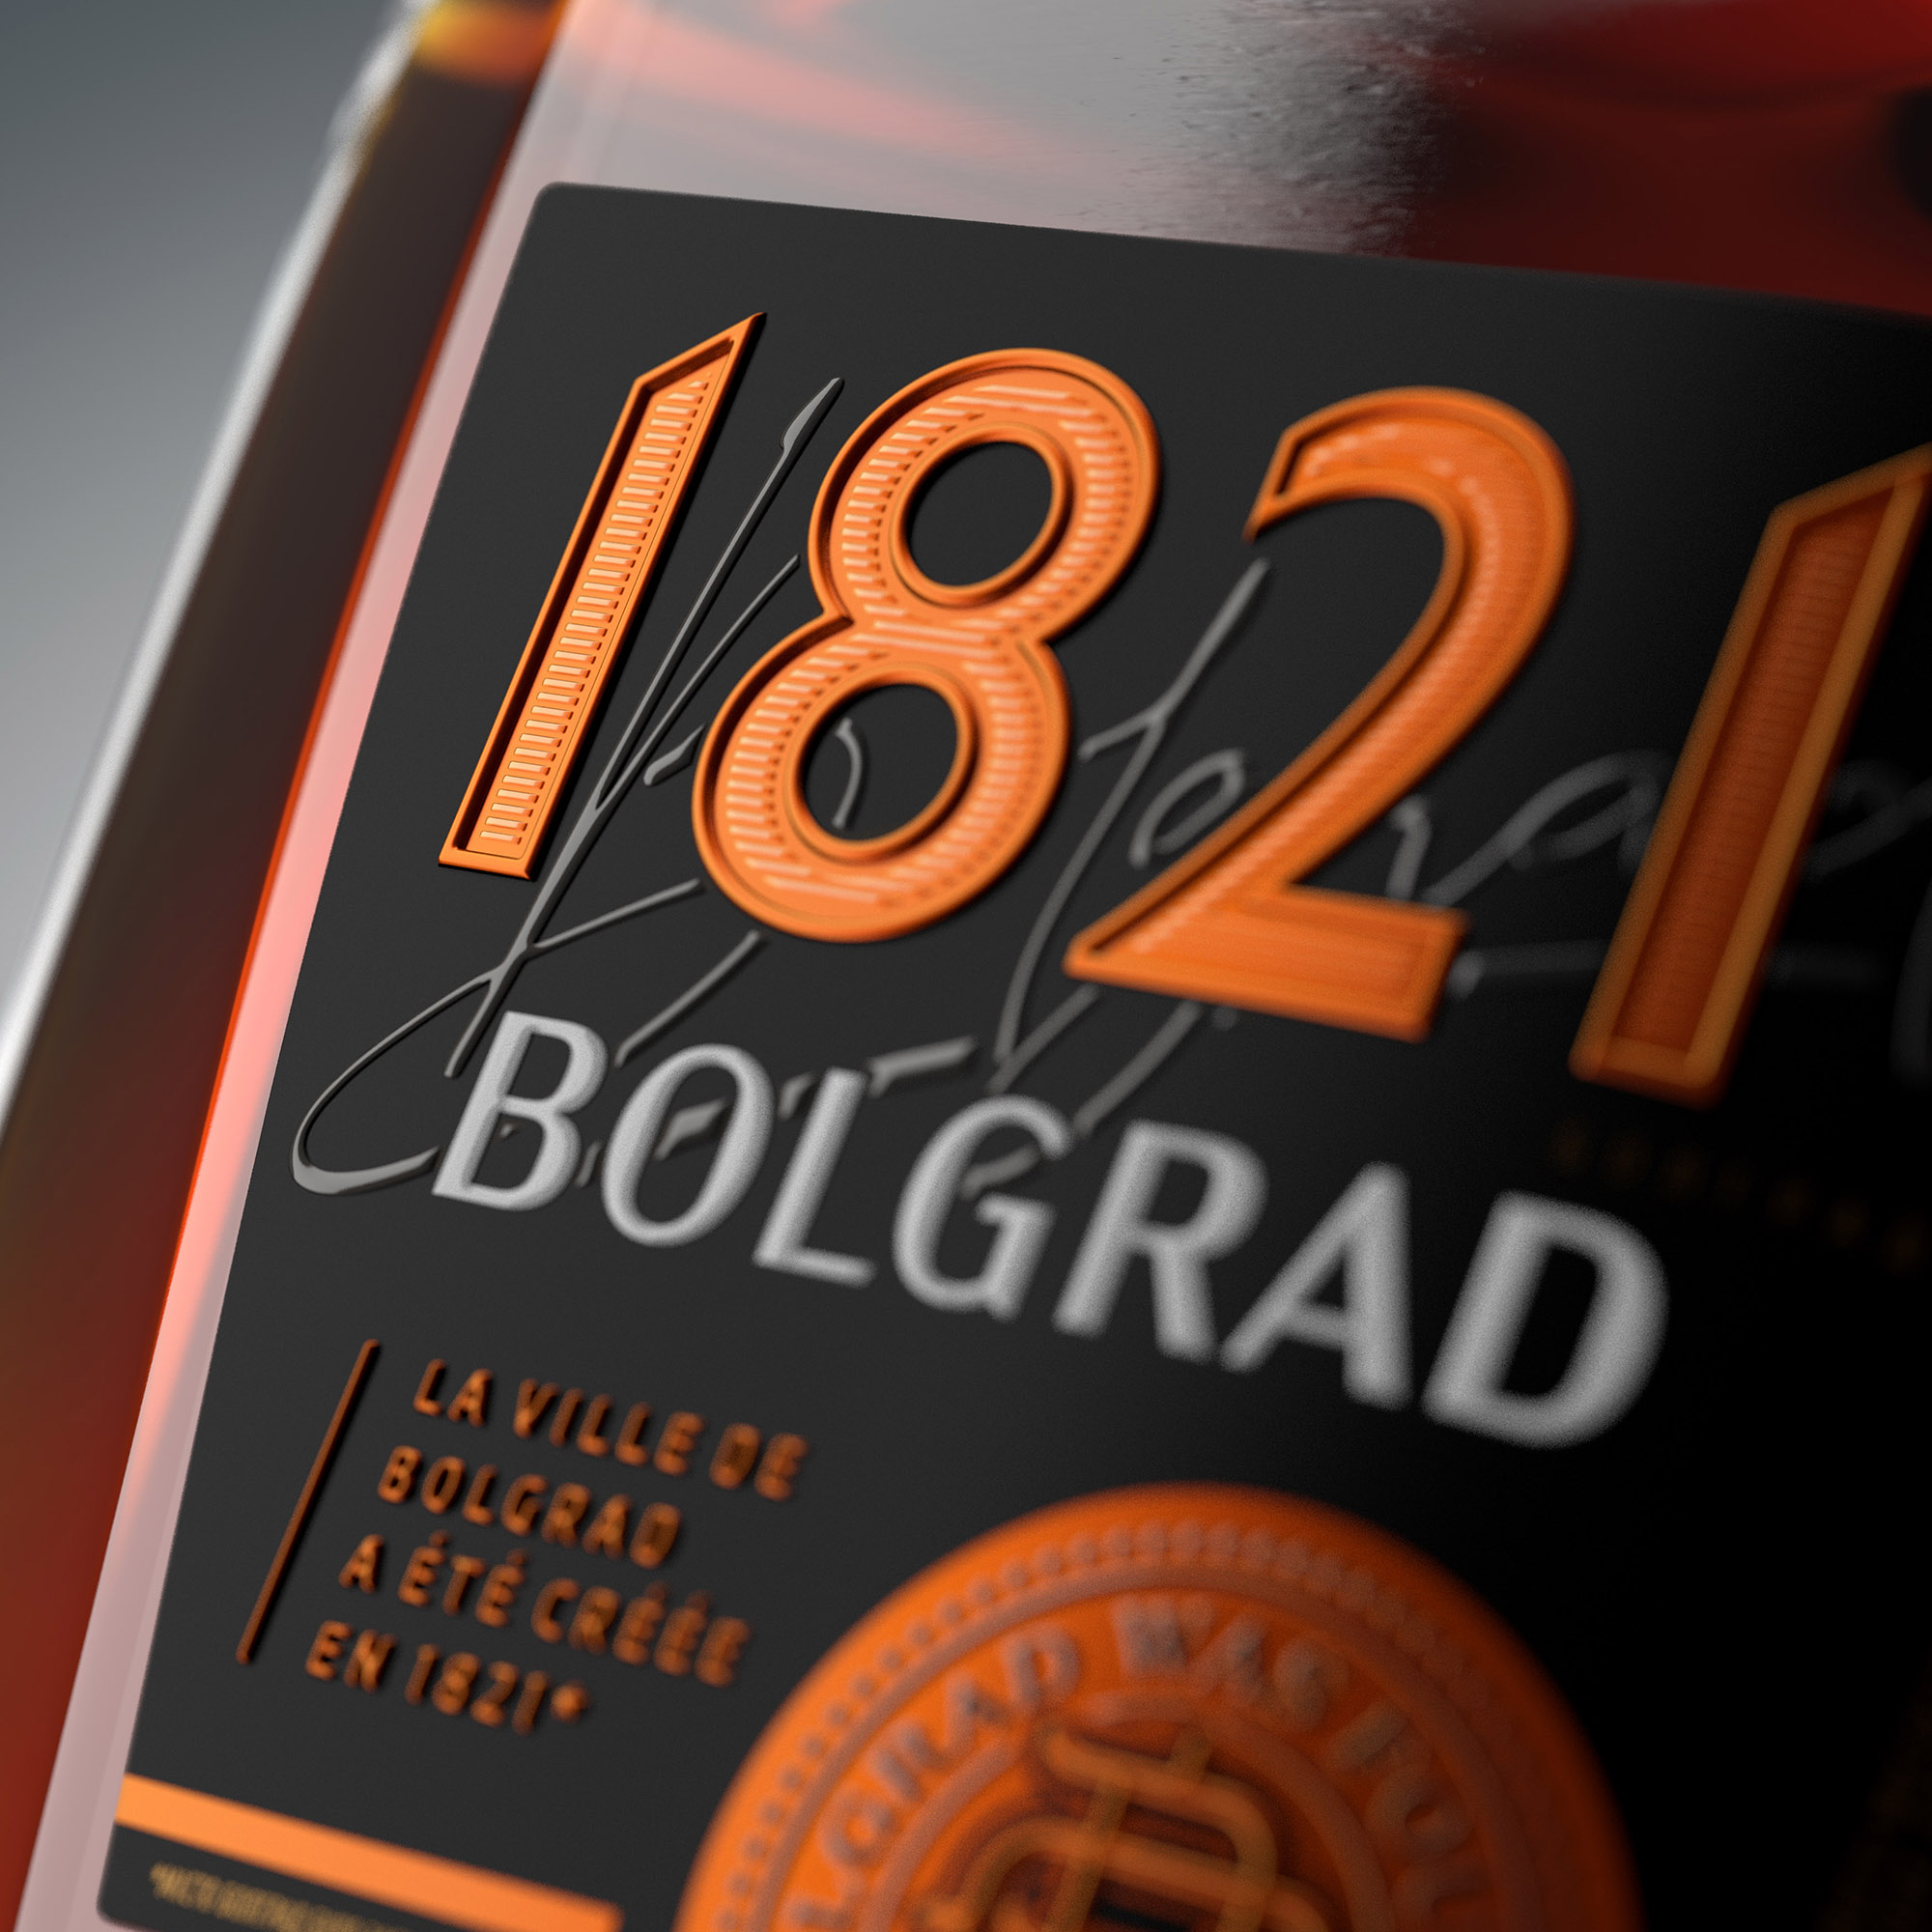 Premium and Innovative Brand Design for 1821 Bolgrad Brandy